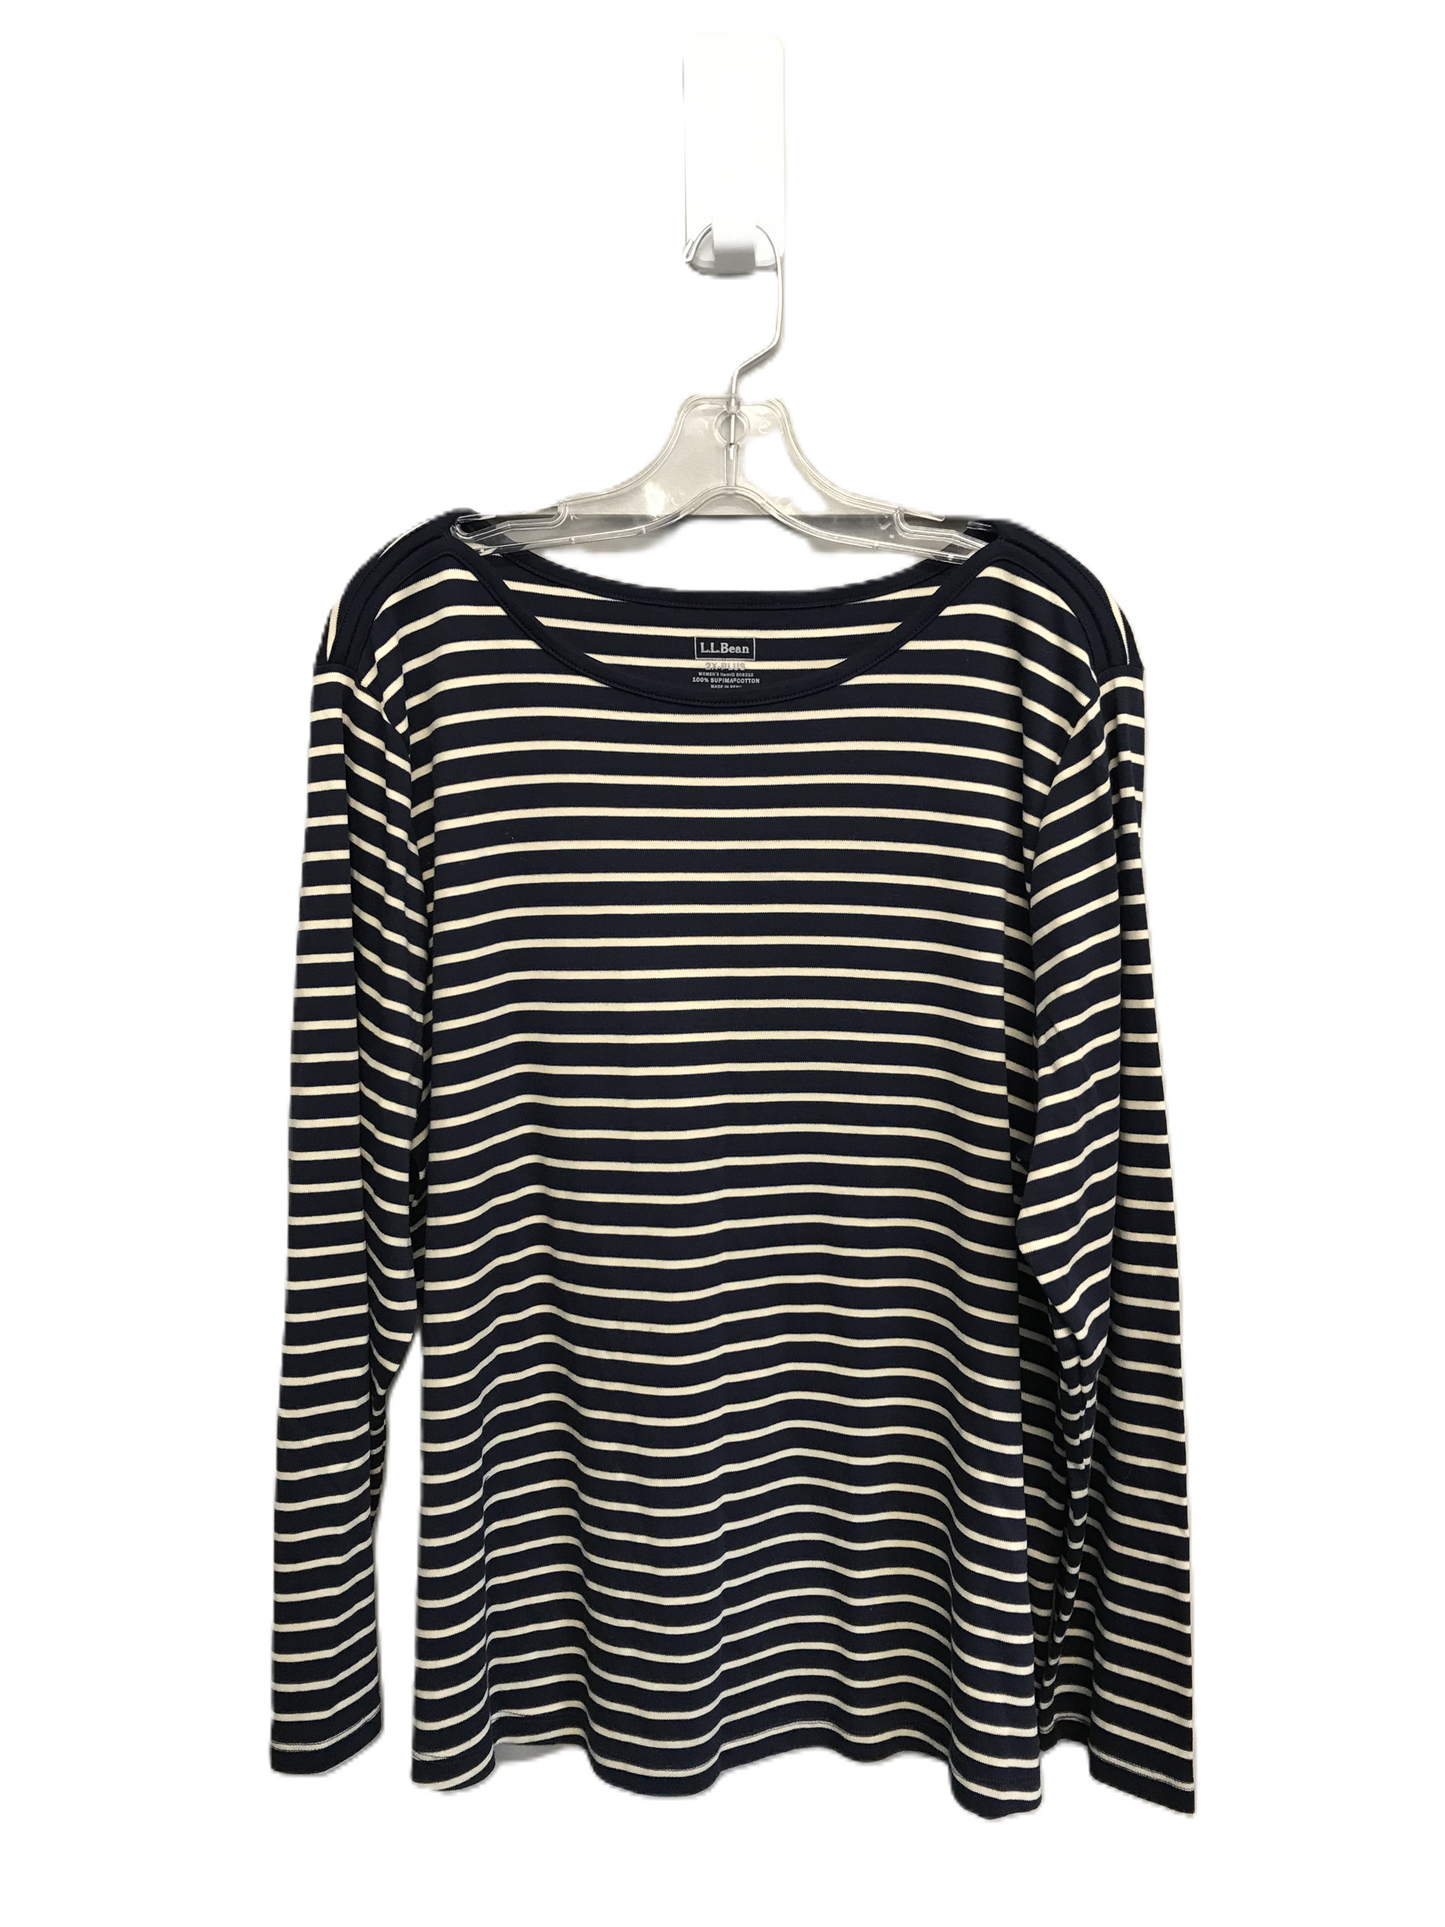 Striped Pattern Top Long Sleeve Basic By L.l. Bean, Size: 2x